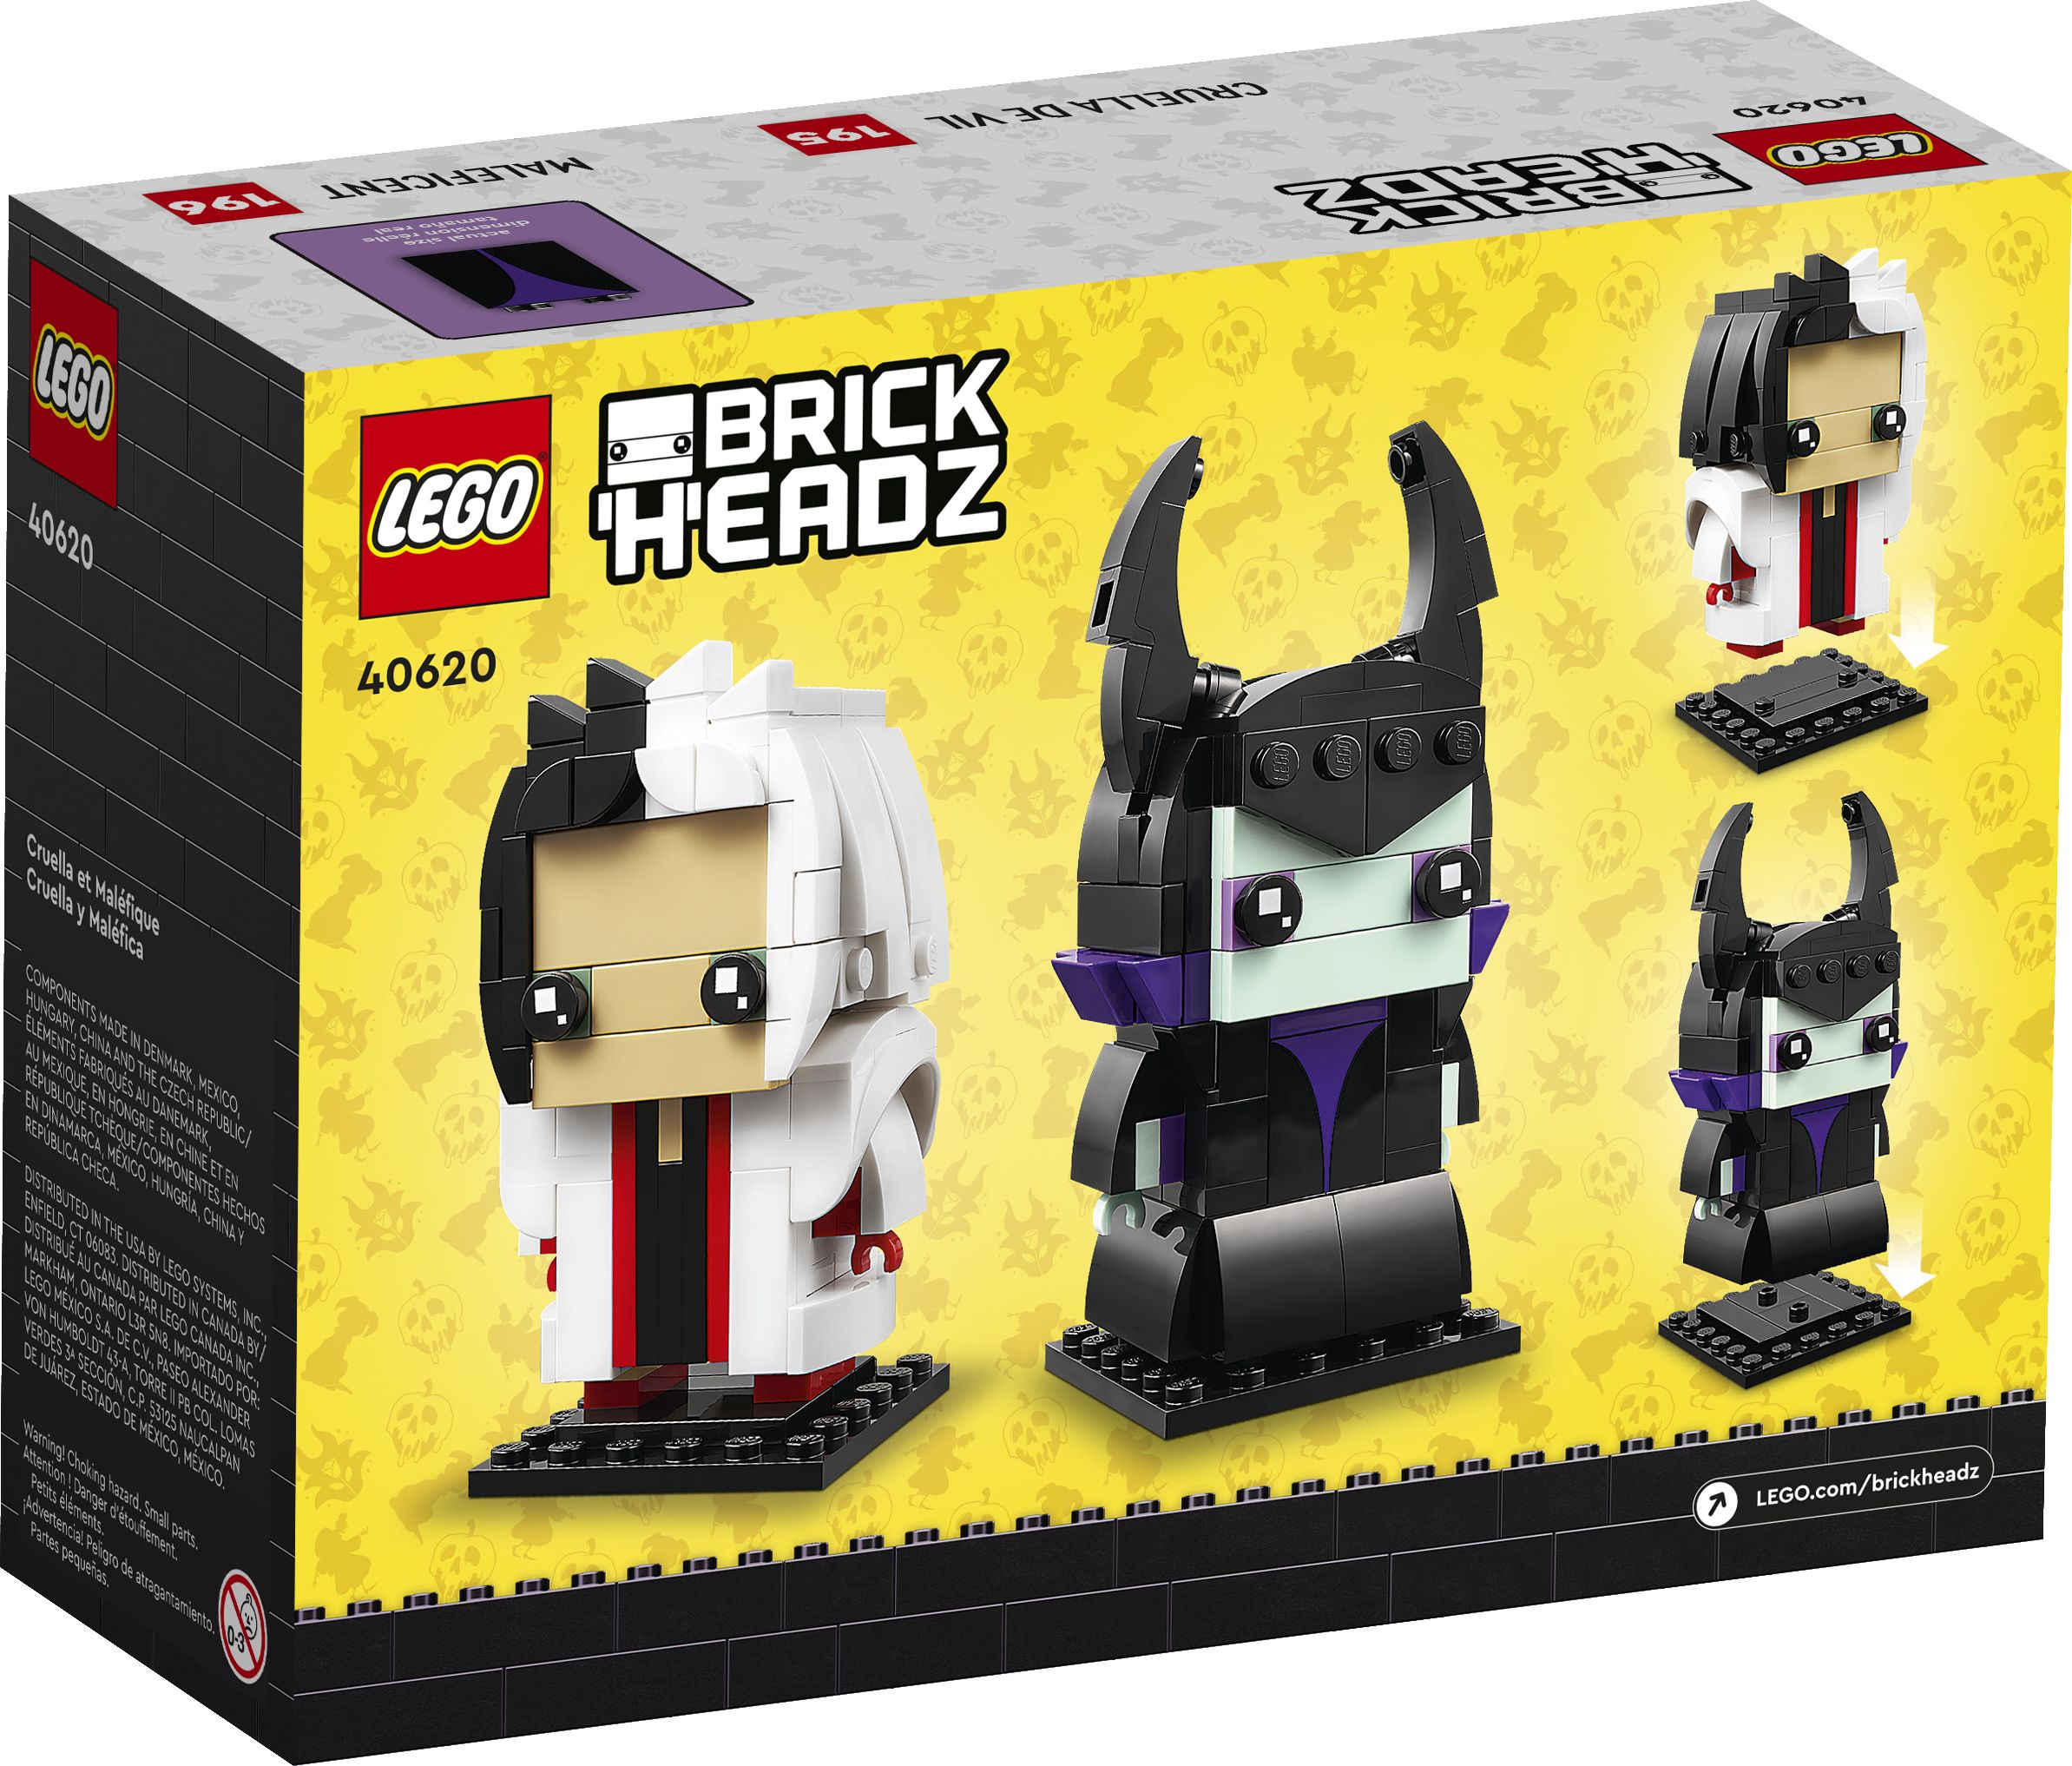 LEGO BrickHeadz 40620 Cruella und Maleficent LEGO_40620_Box5_v39.jpg